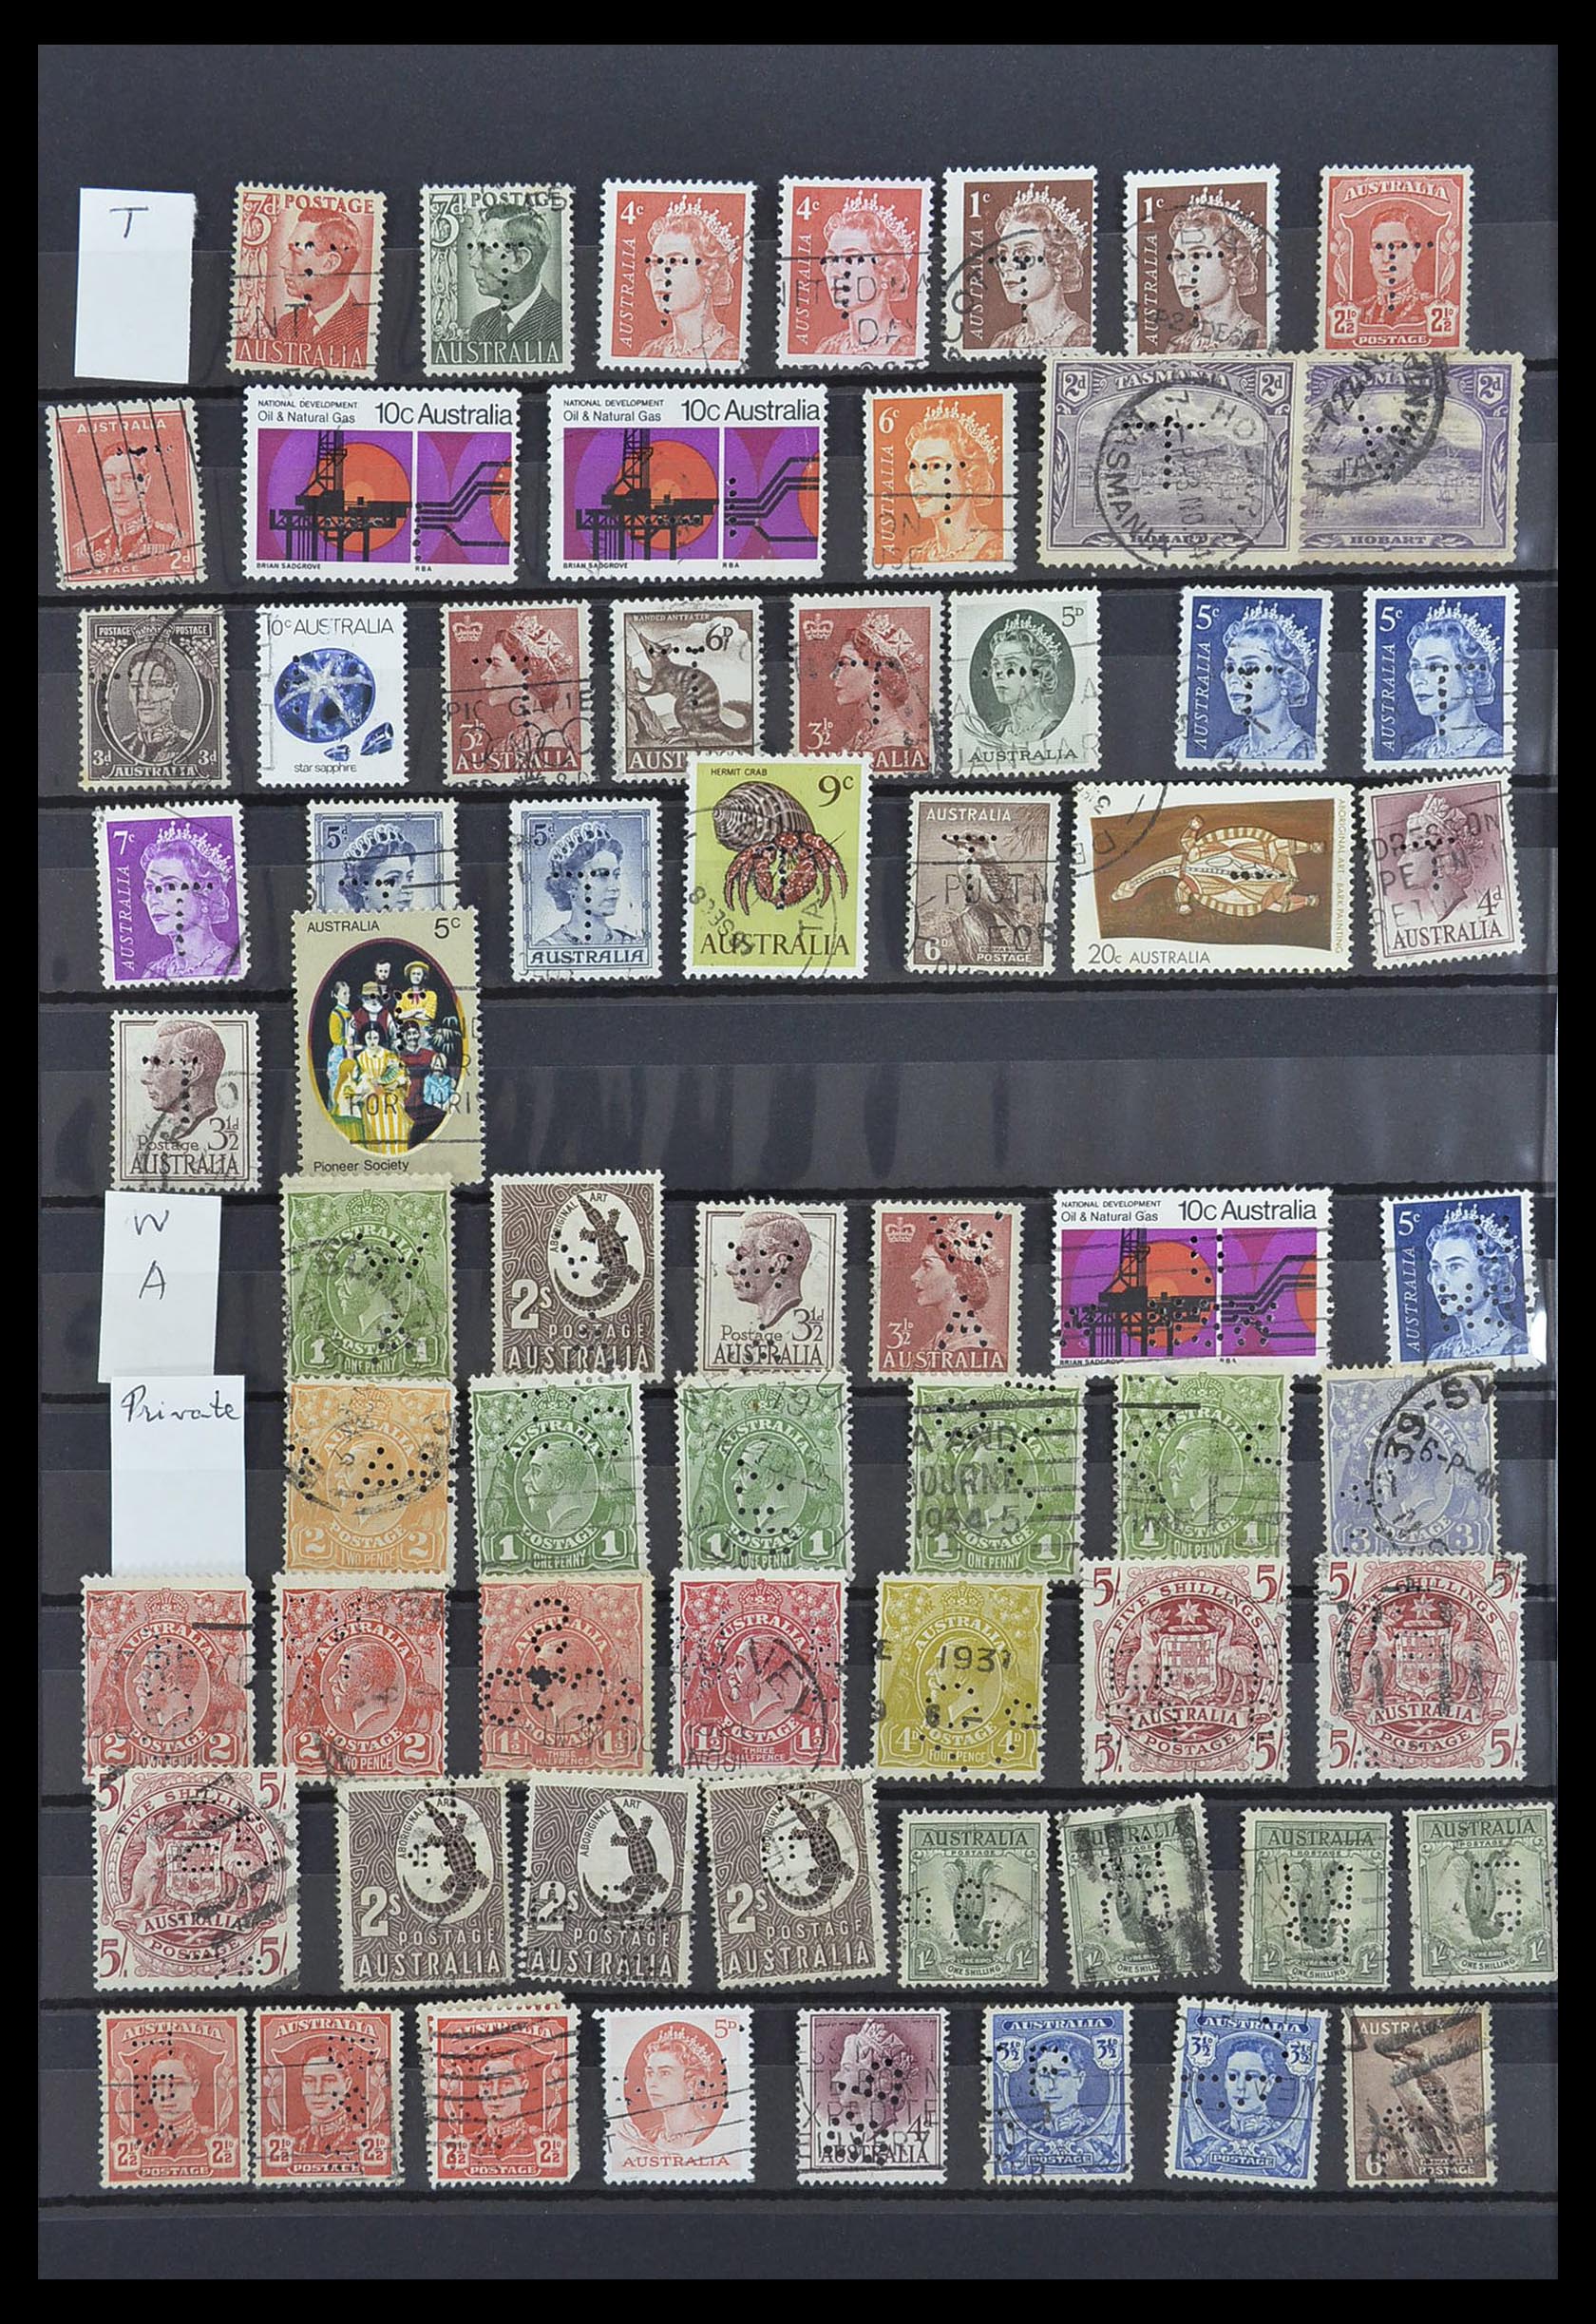 33510 014 - Stamp collection 33510 Australia perfins 1900-1970.